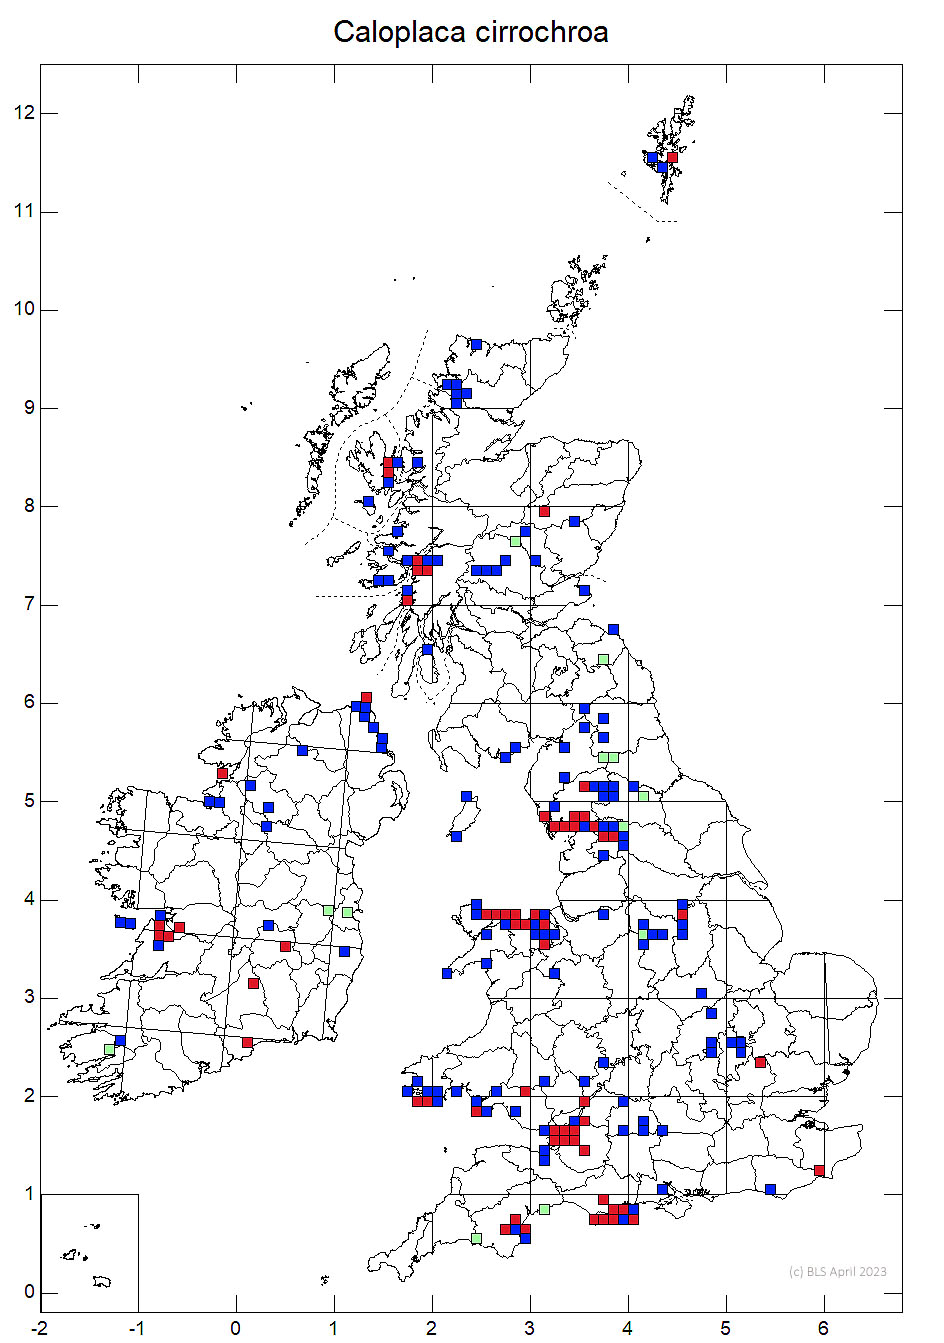 Caloplaca cirrochroa 10km sq distribution map